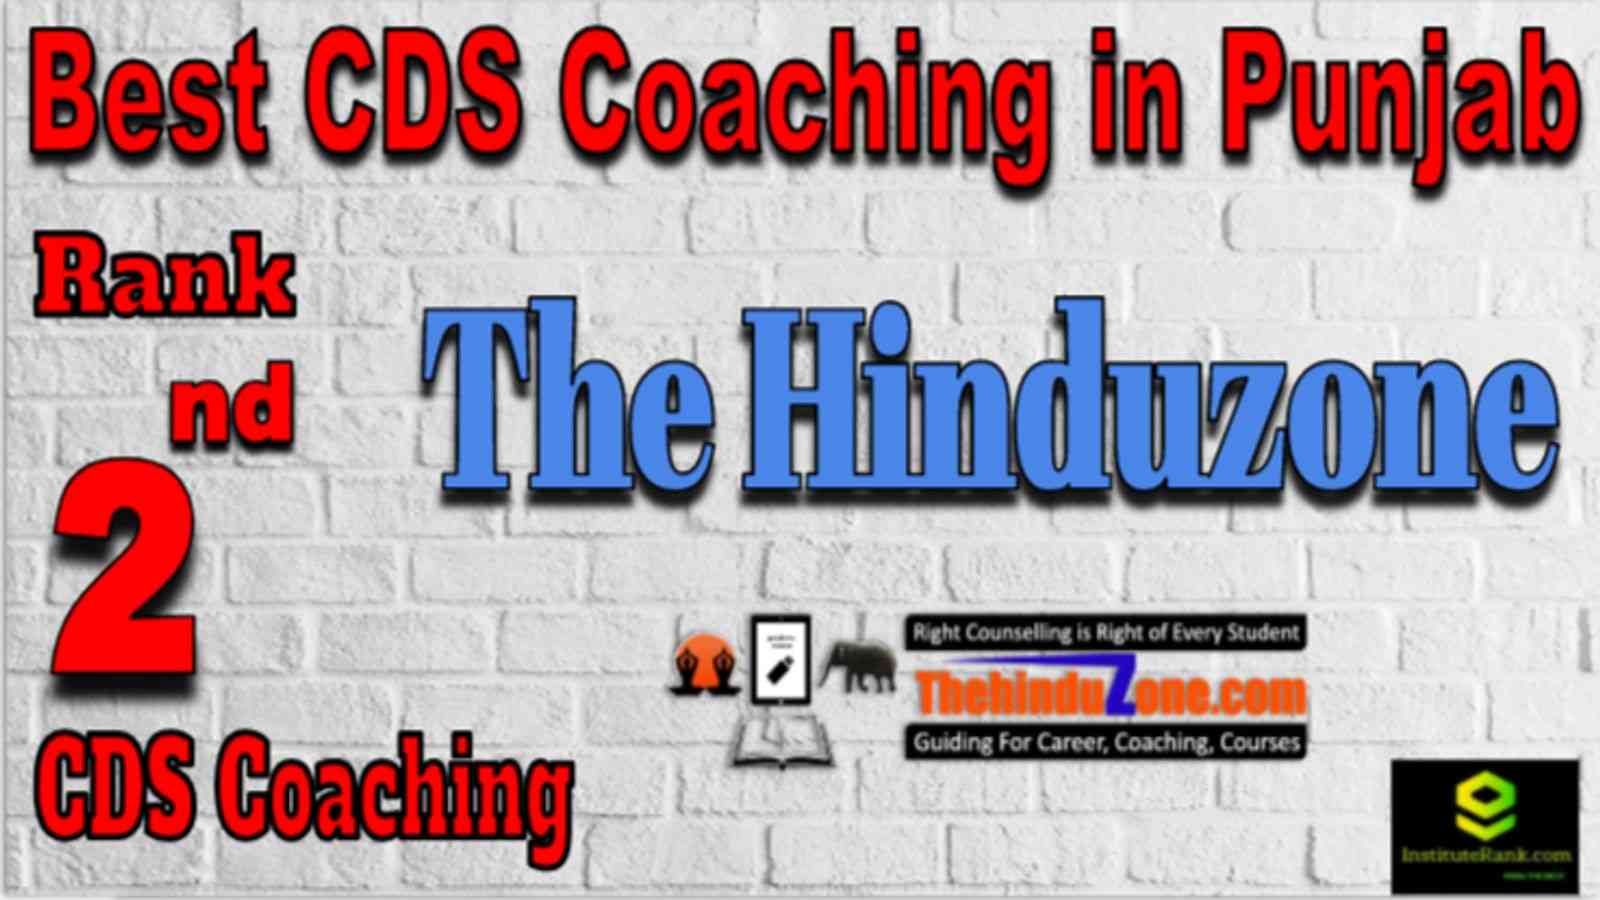 Rank 2 Best CDS Coaching in Punjab